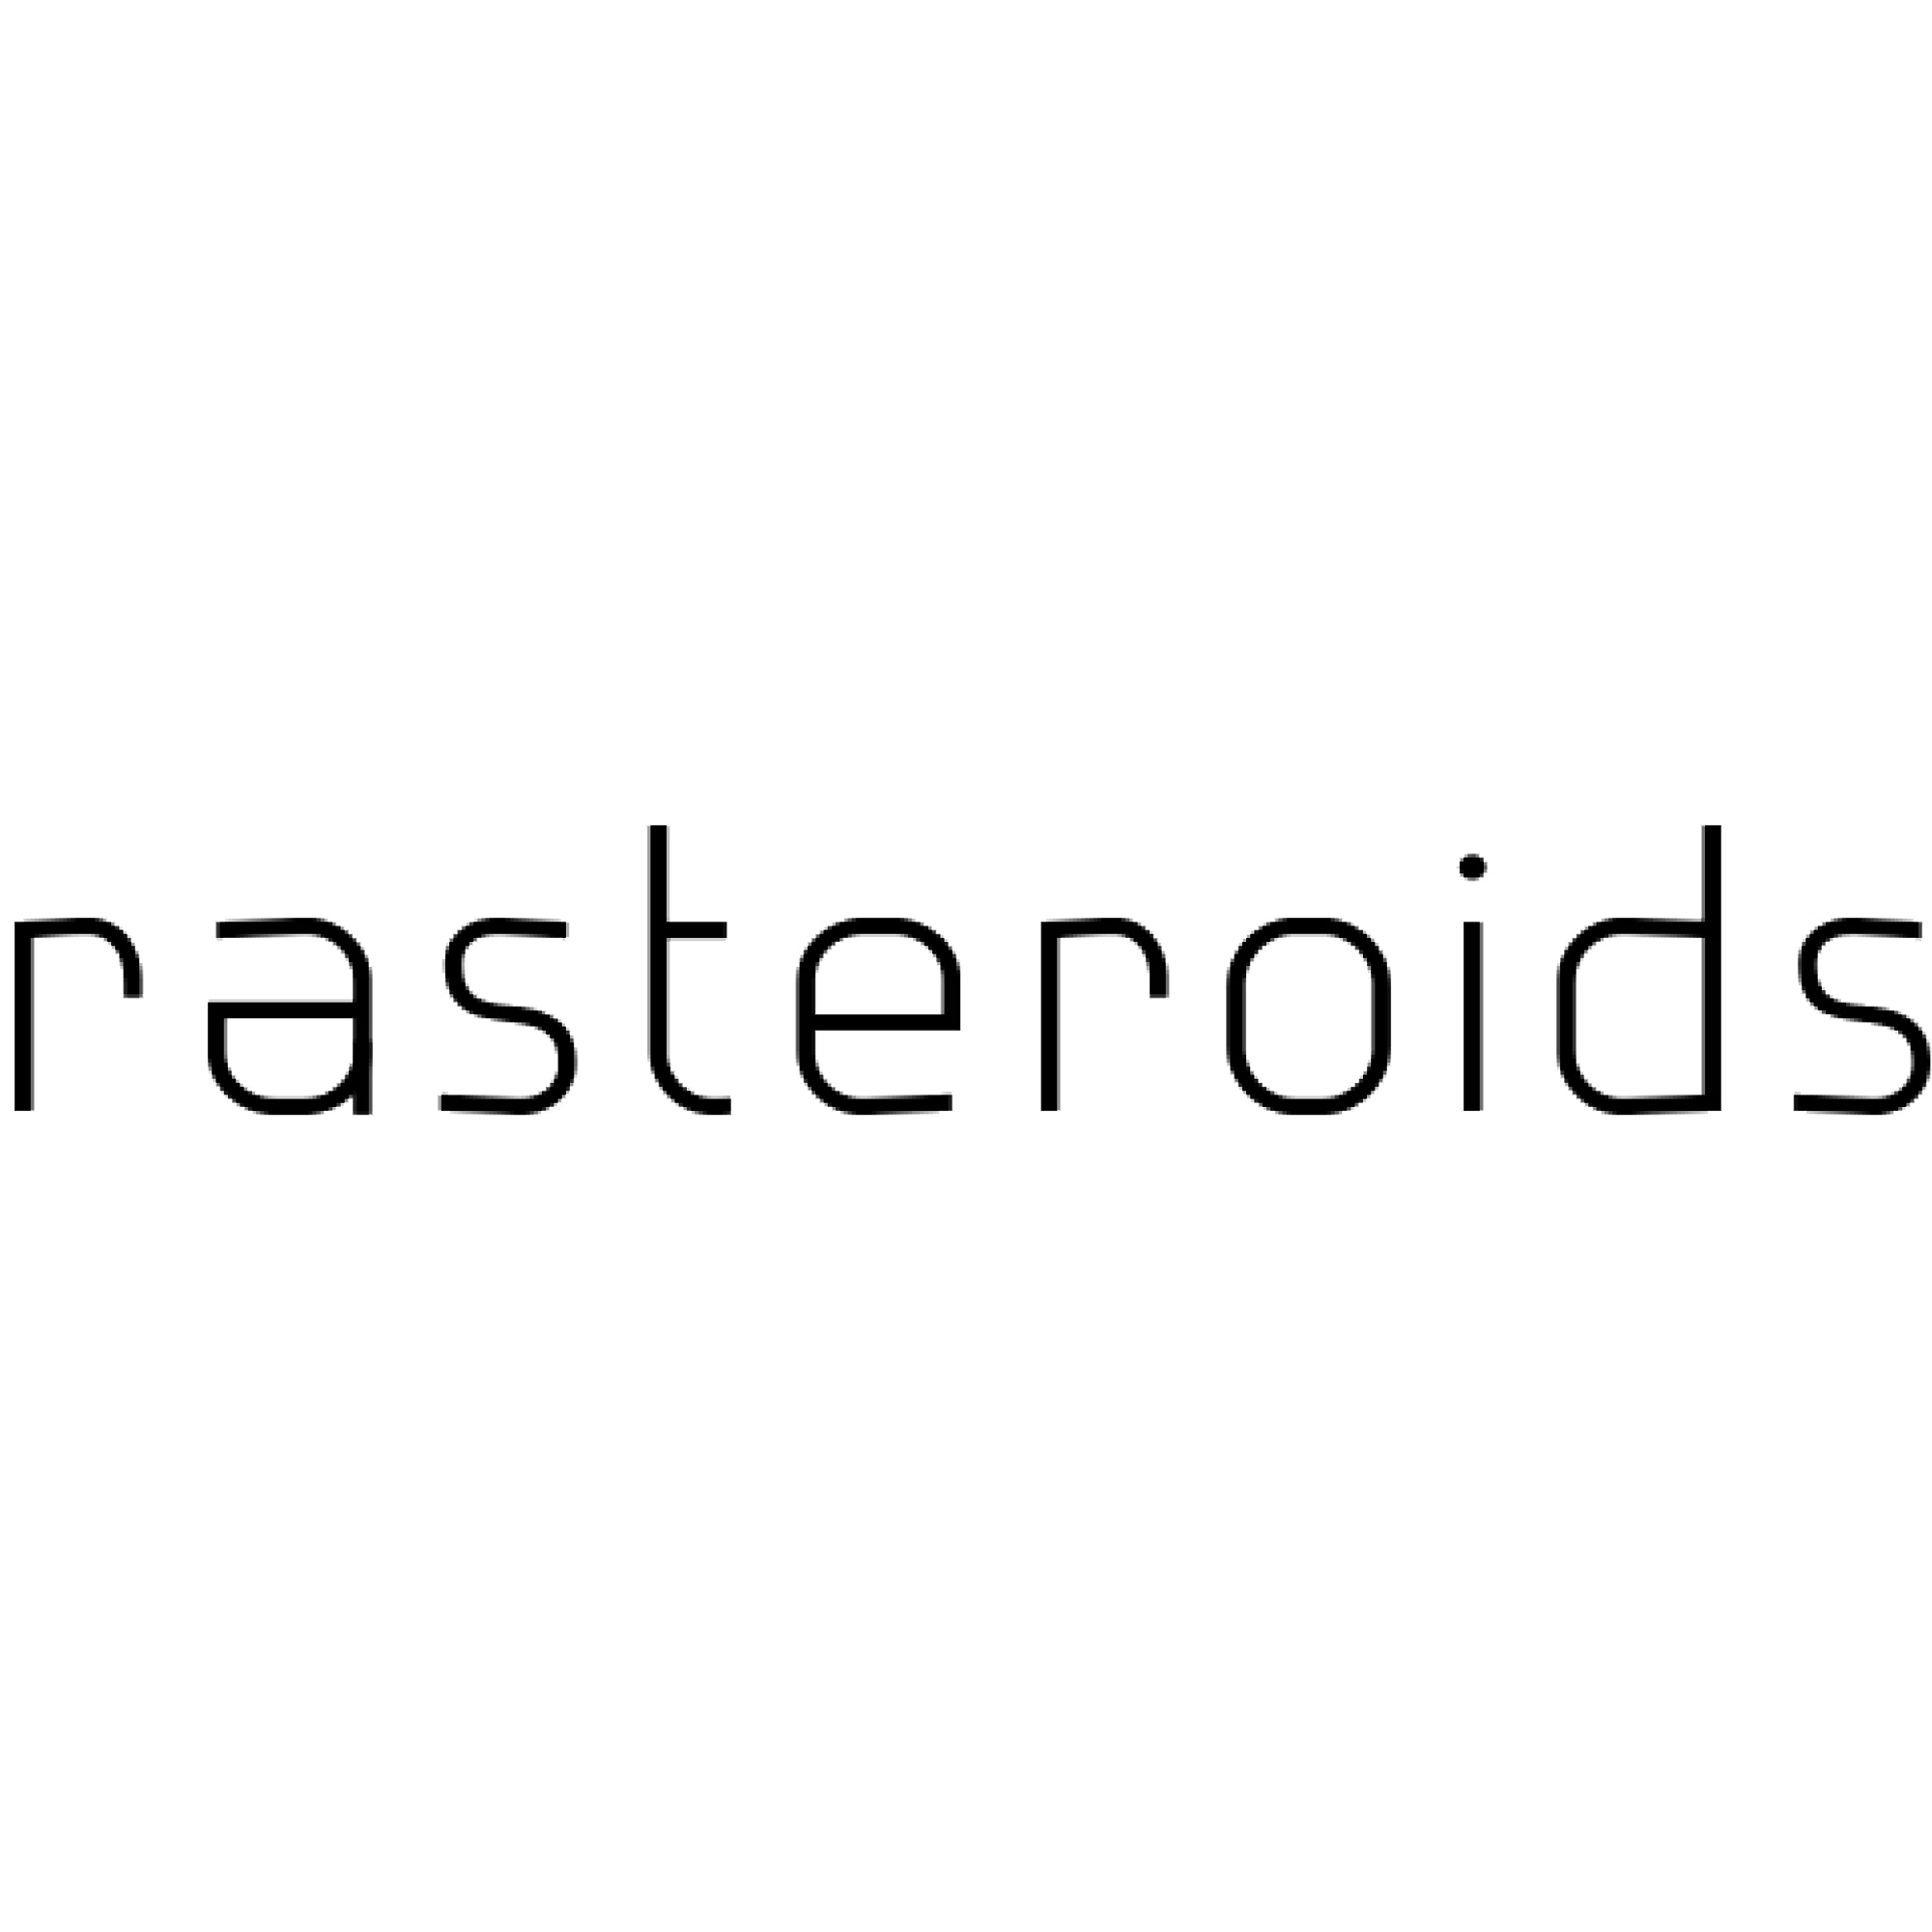 Rasteroids Design